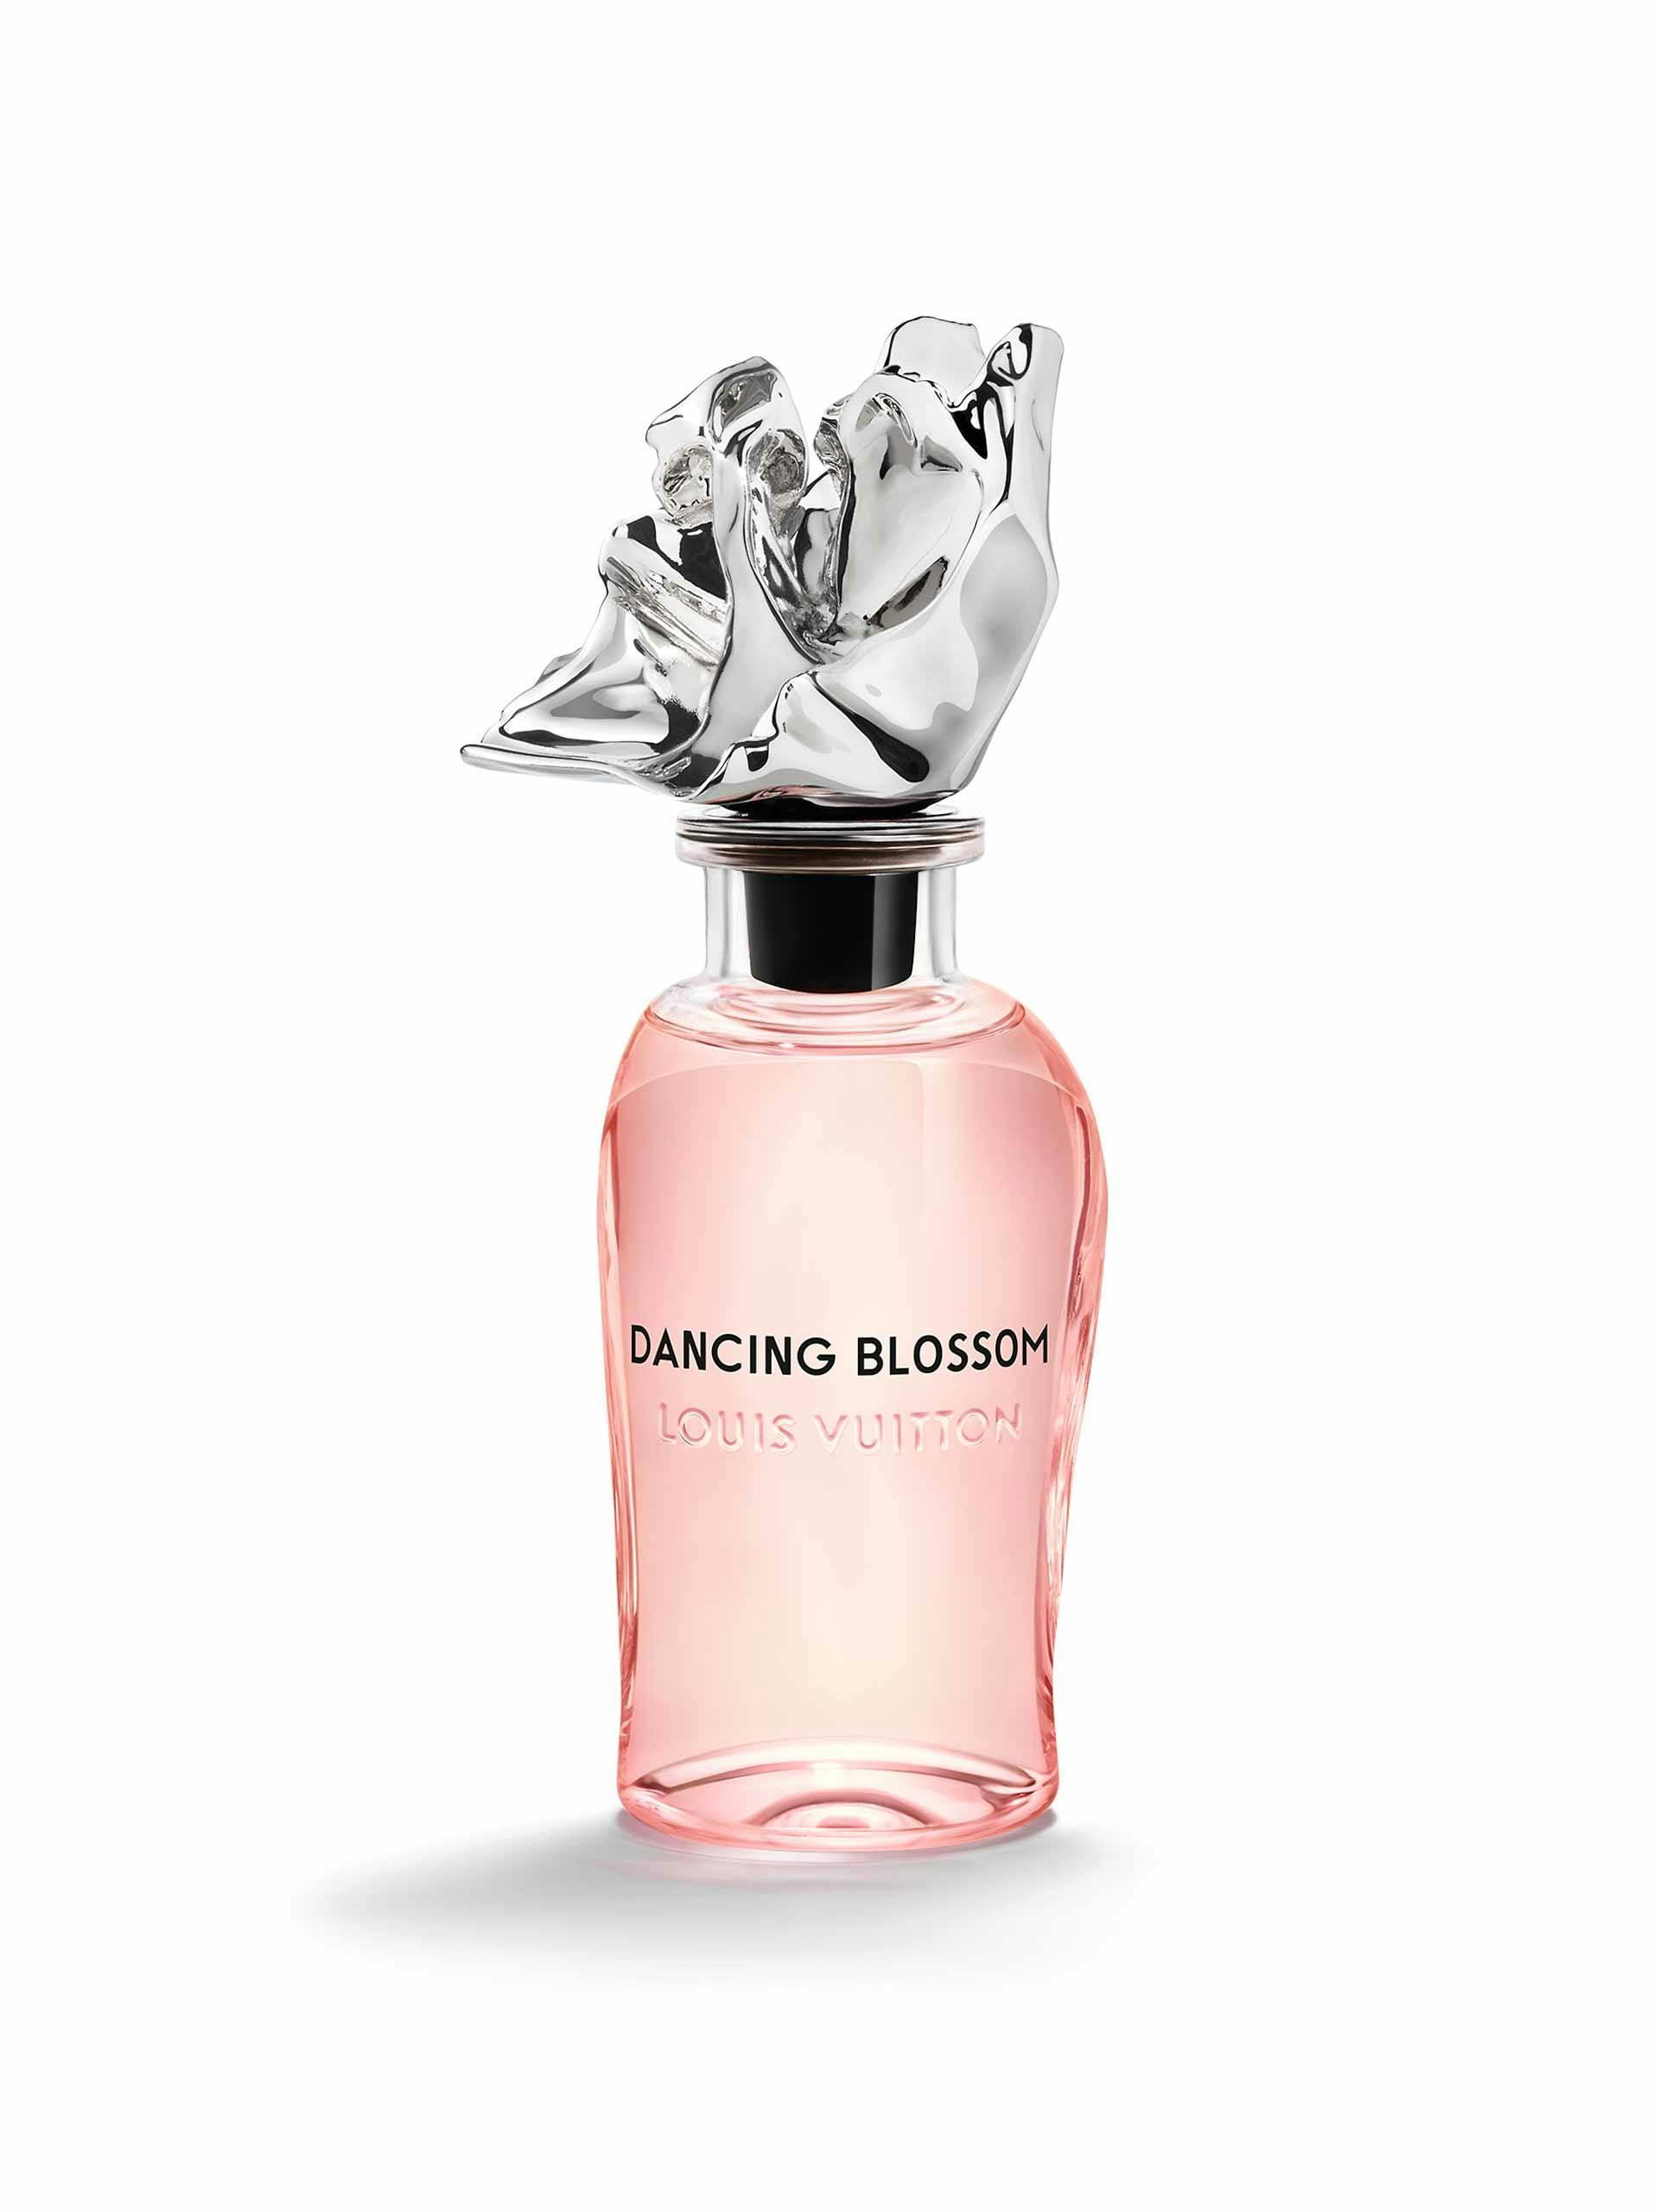 Dancing Blossom fragrance